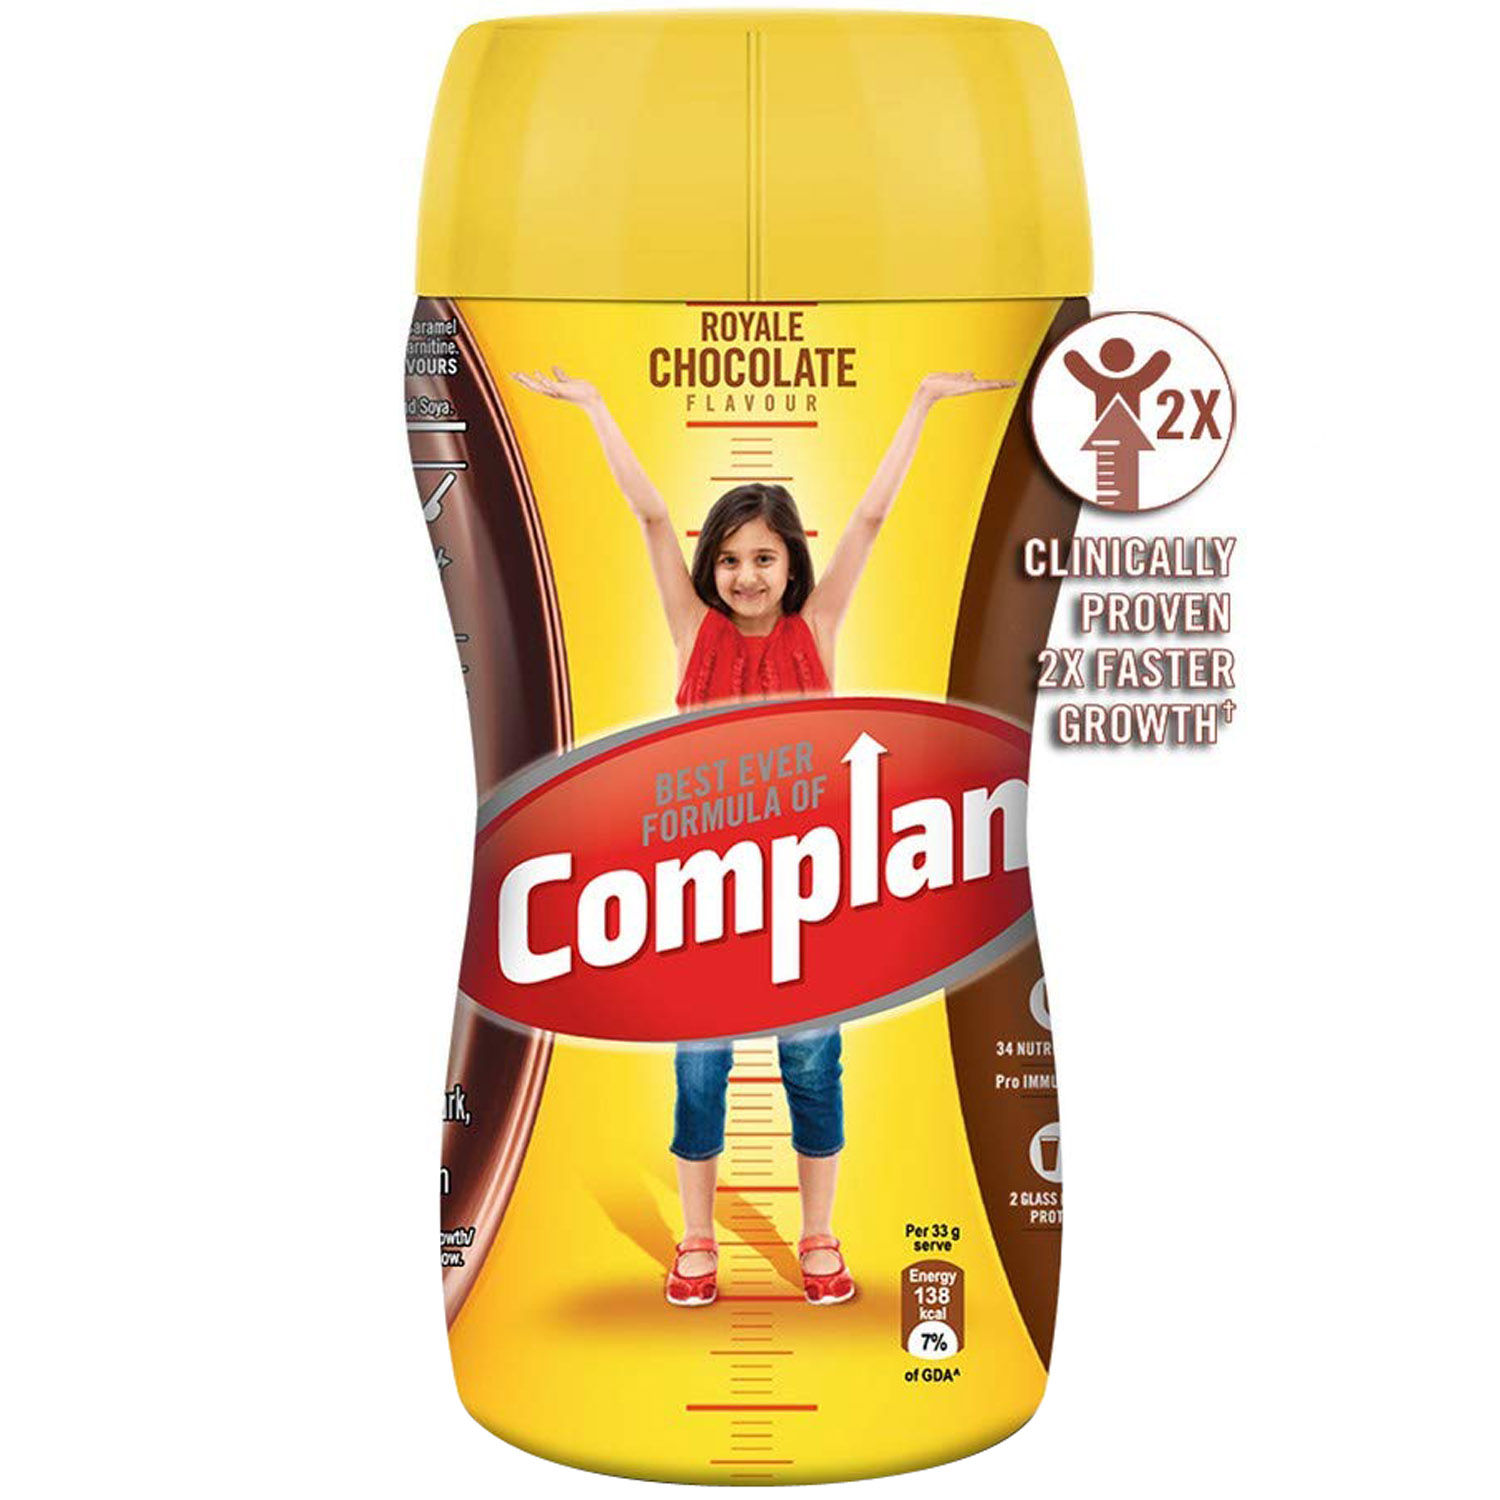 Buy Complan Royale Chocolate Flavoured Health & Nutrition Drink, 200 gm Jar Online